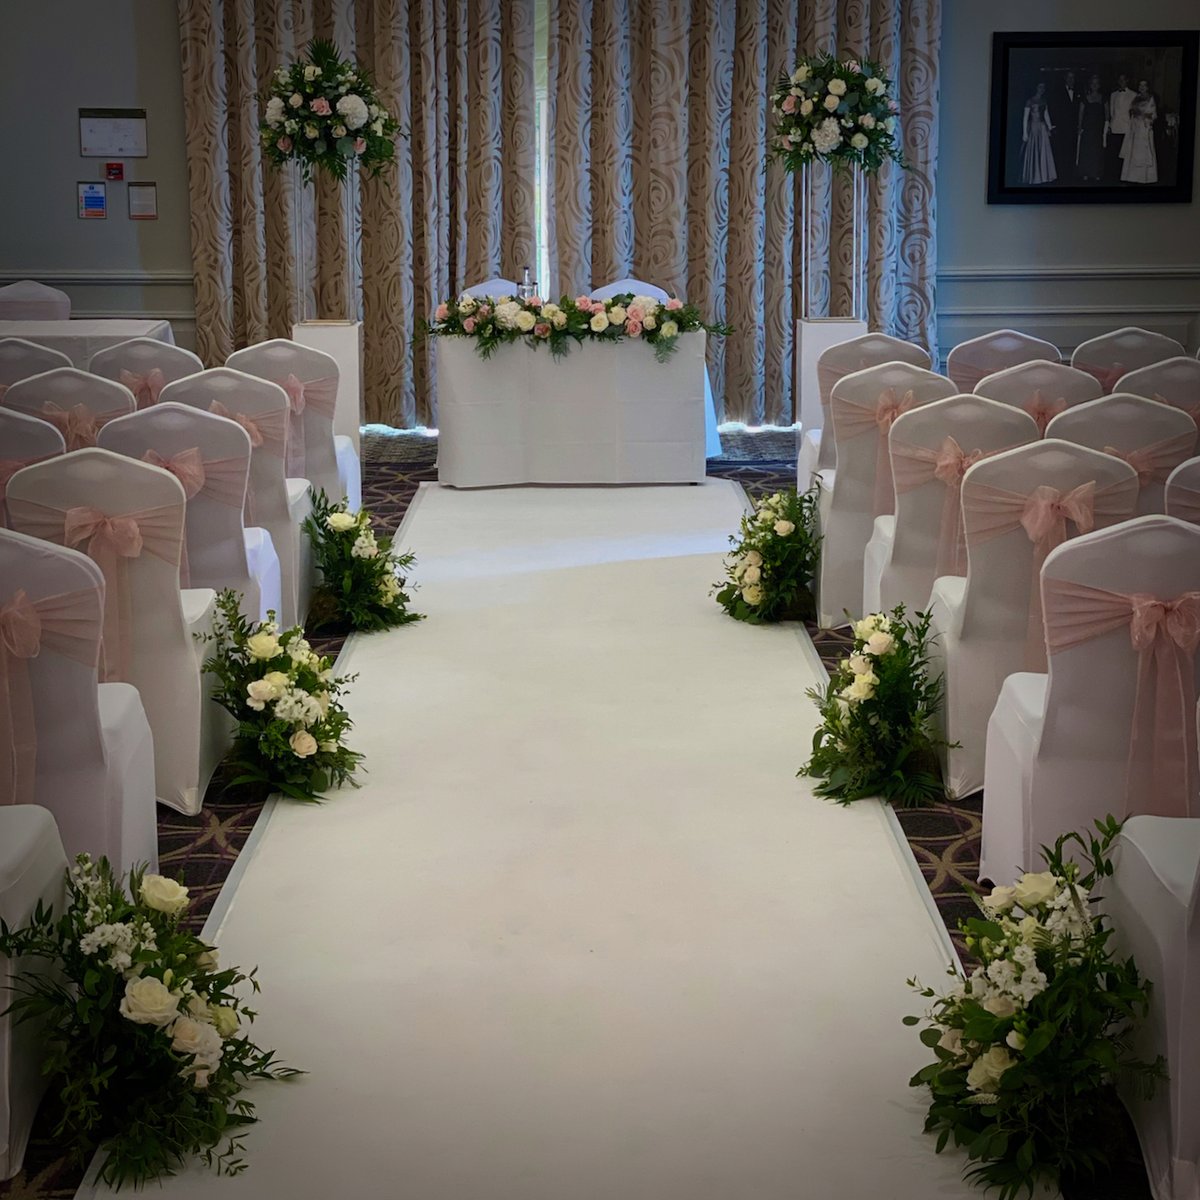 The luxury of Sopwell House creates an intimate wedding ceremony 💍
#SopwellHouse #WeddingCeremony #CeremonyFlowers #WeddingFlowers #WeddingFlorist #WeddingDayMemories #Hertfordshire #HemelHempstead #MaplesFlowers